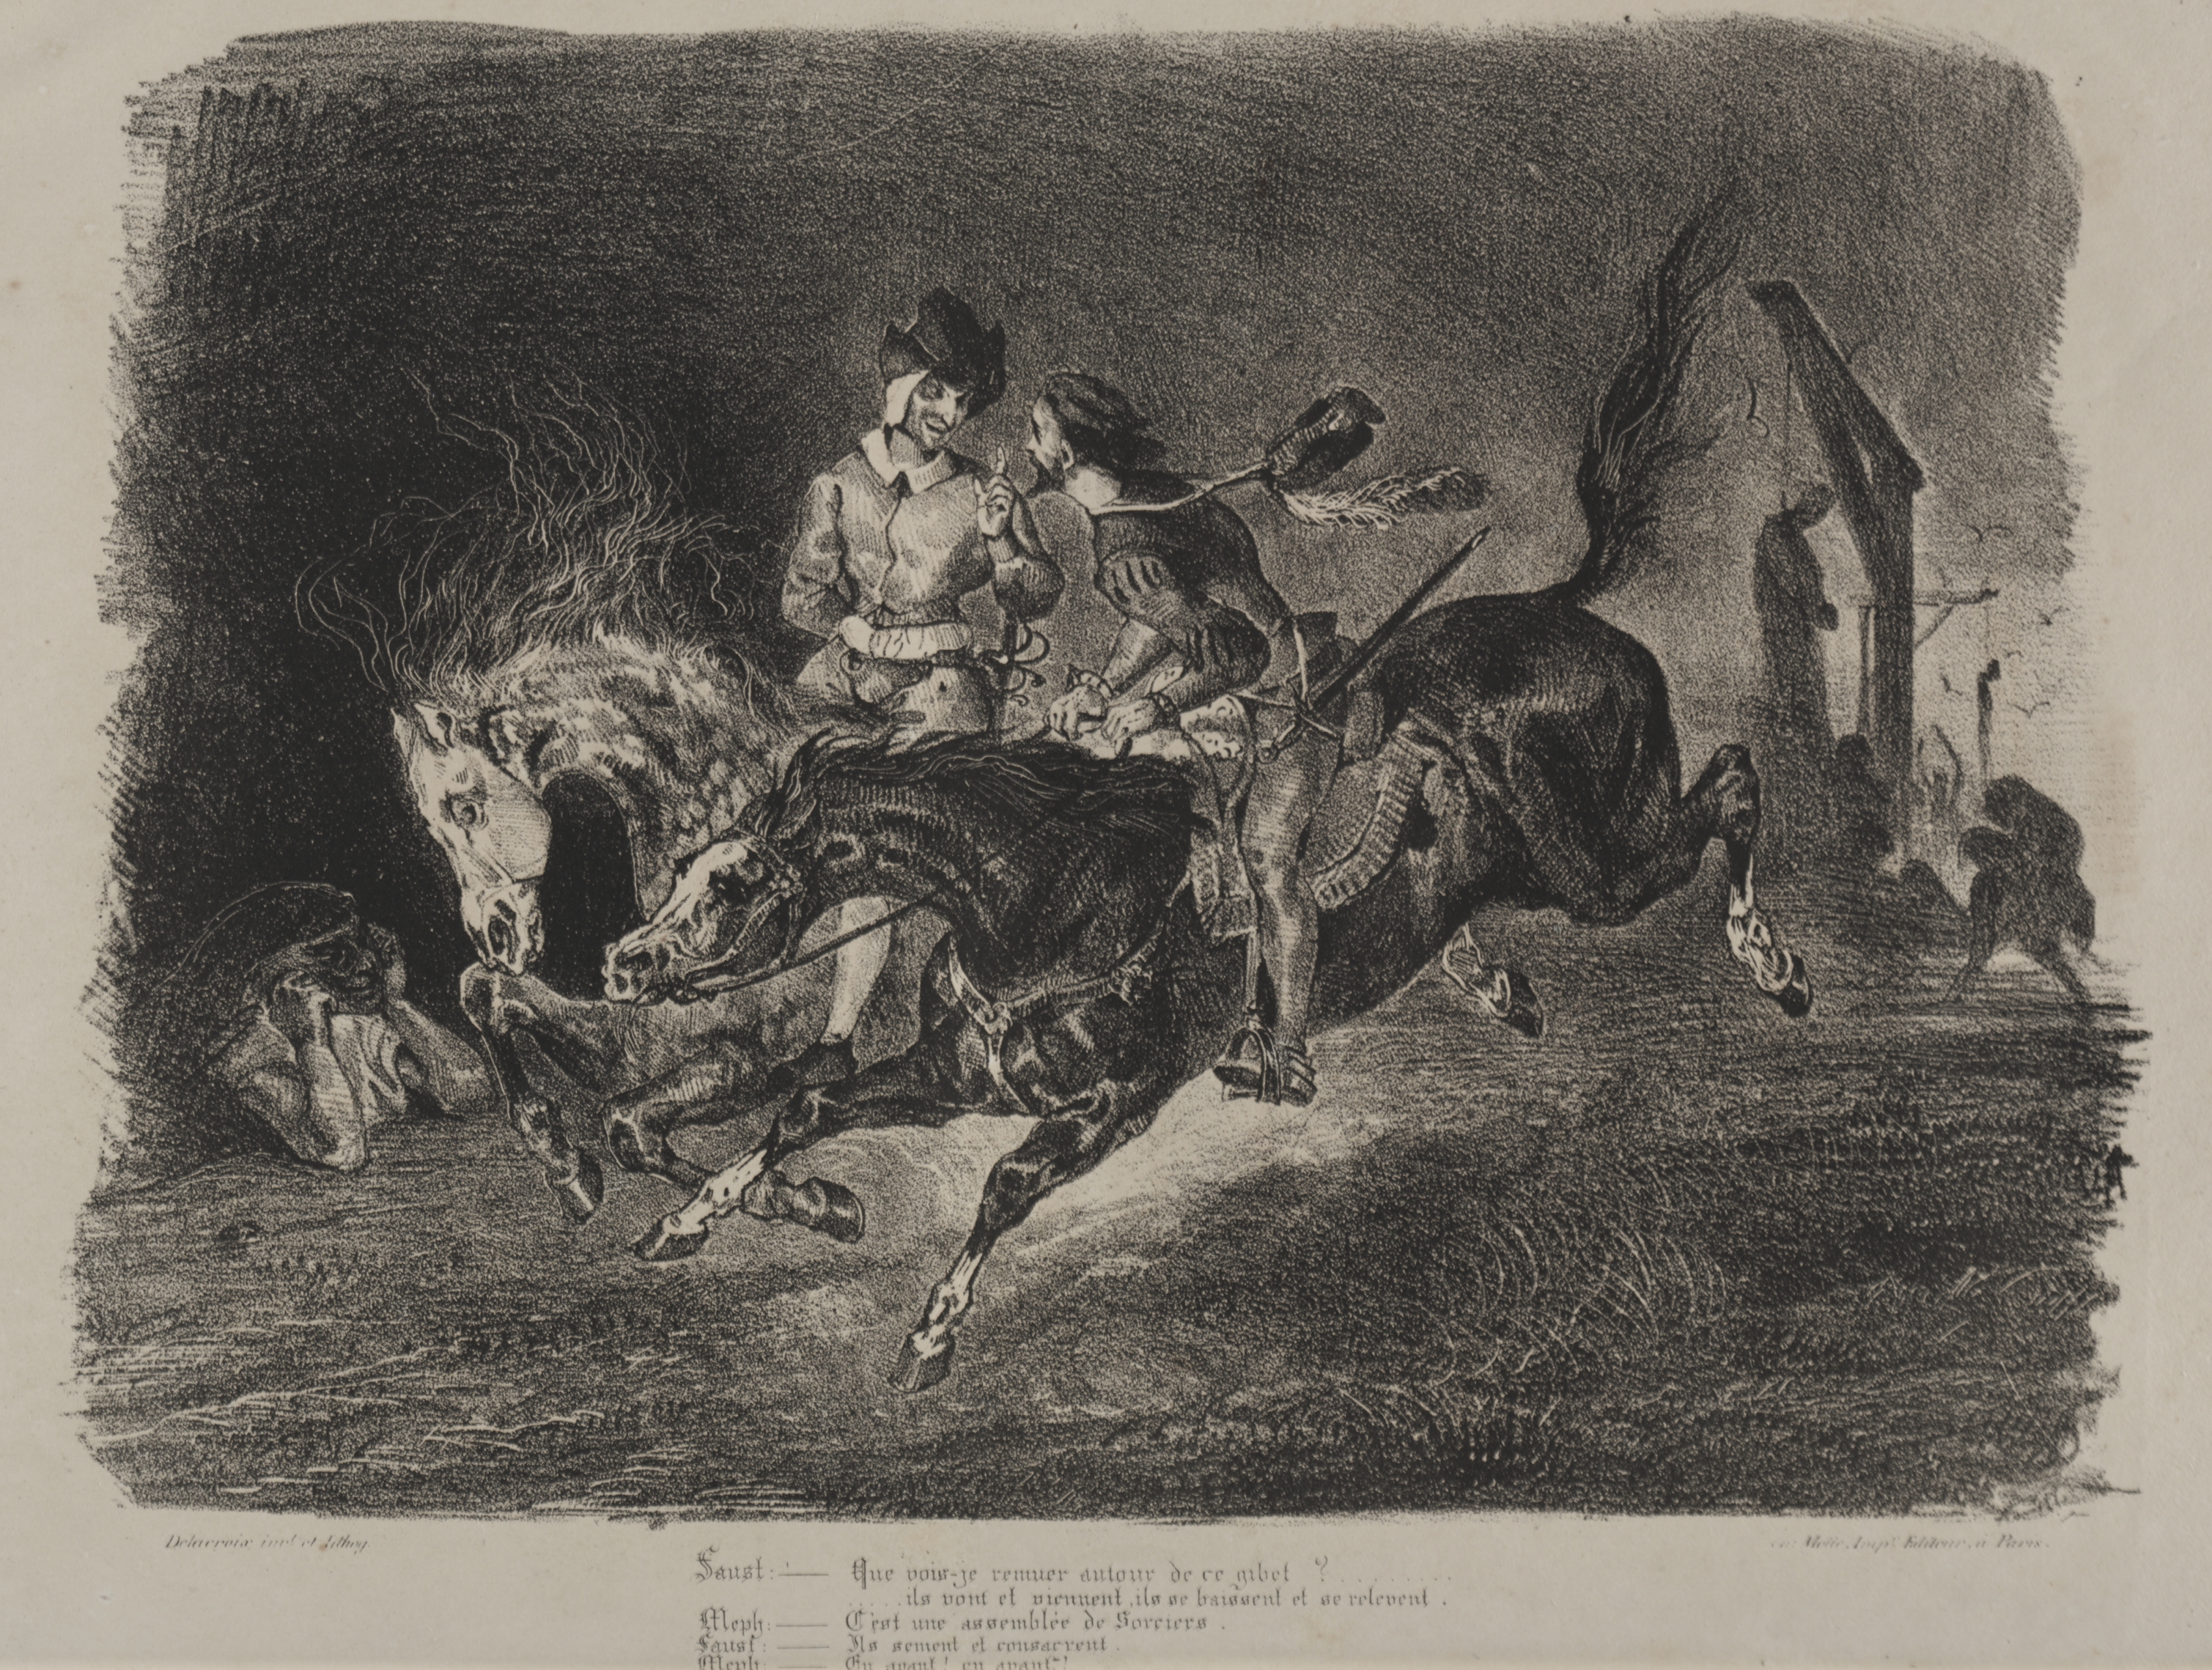 Illustrations for Faust: Faust and Méphistophélés horse riding on the Sabbath